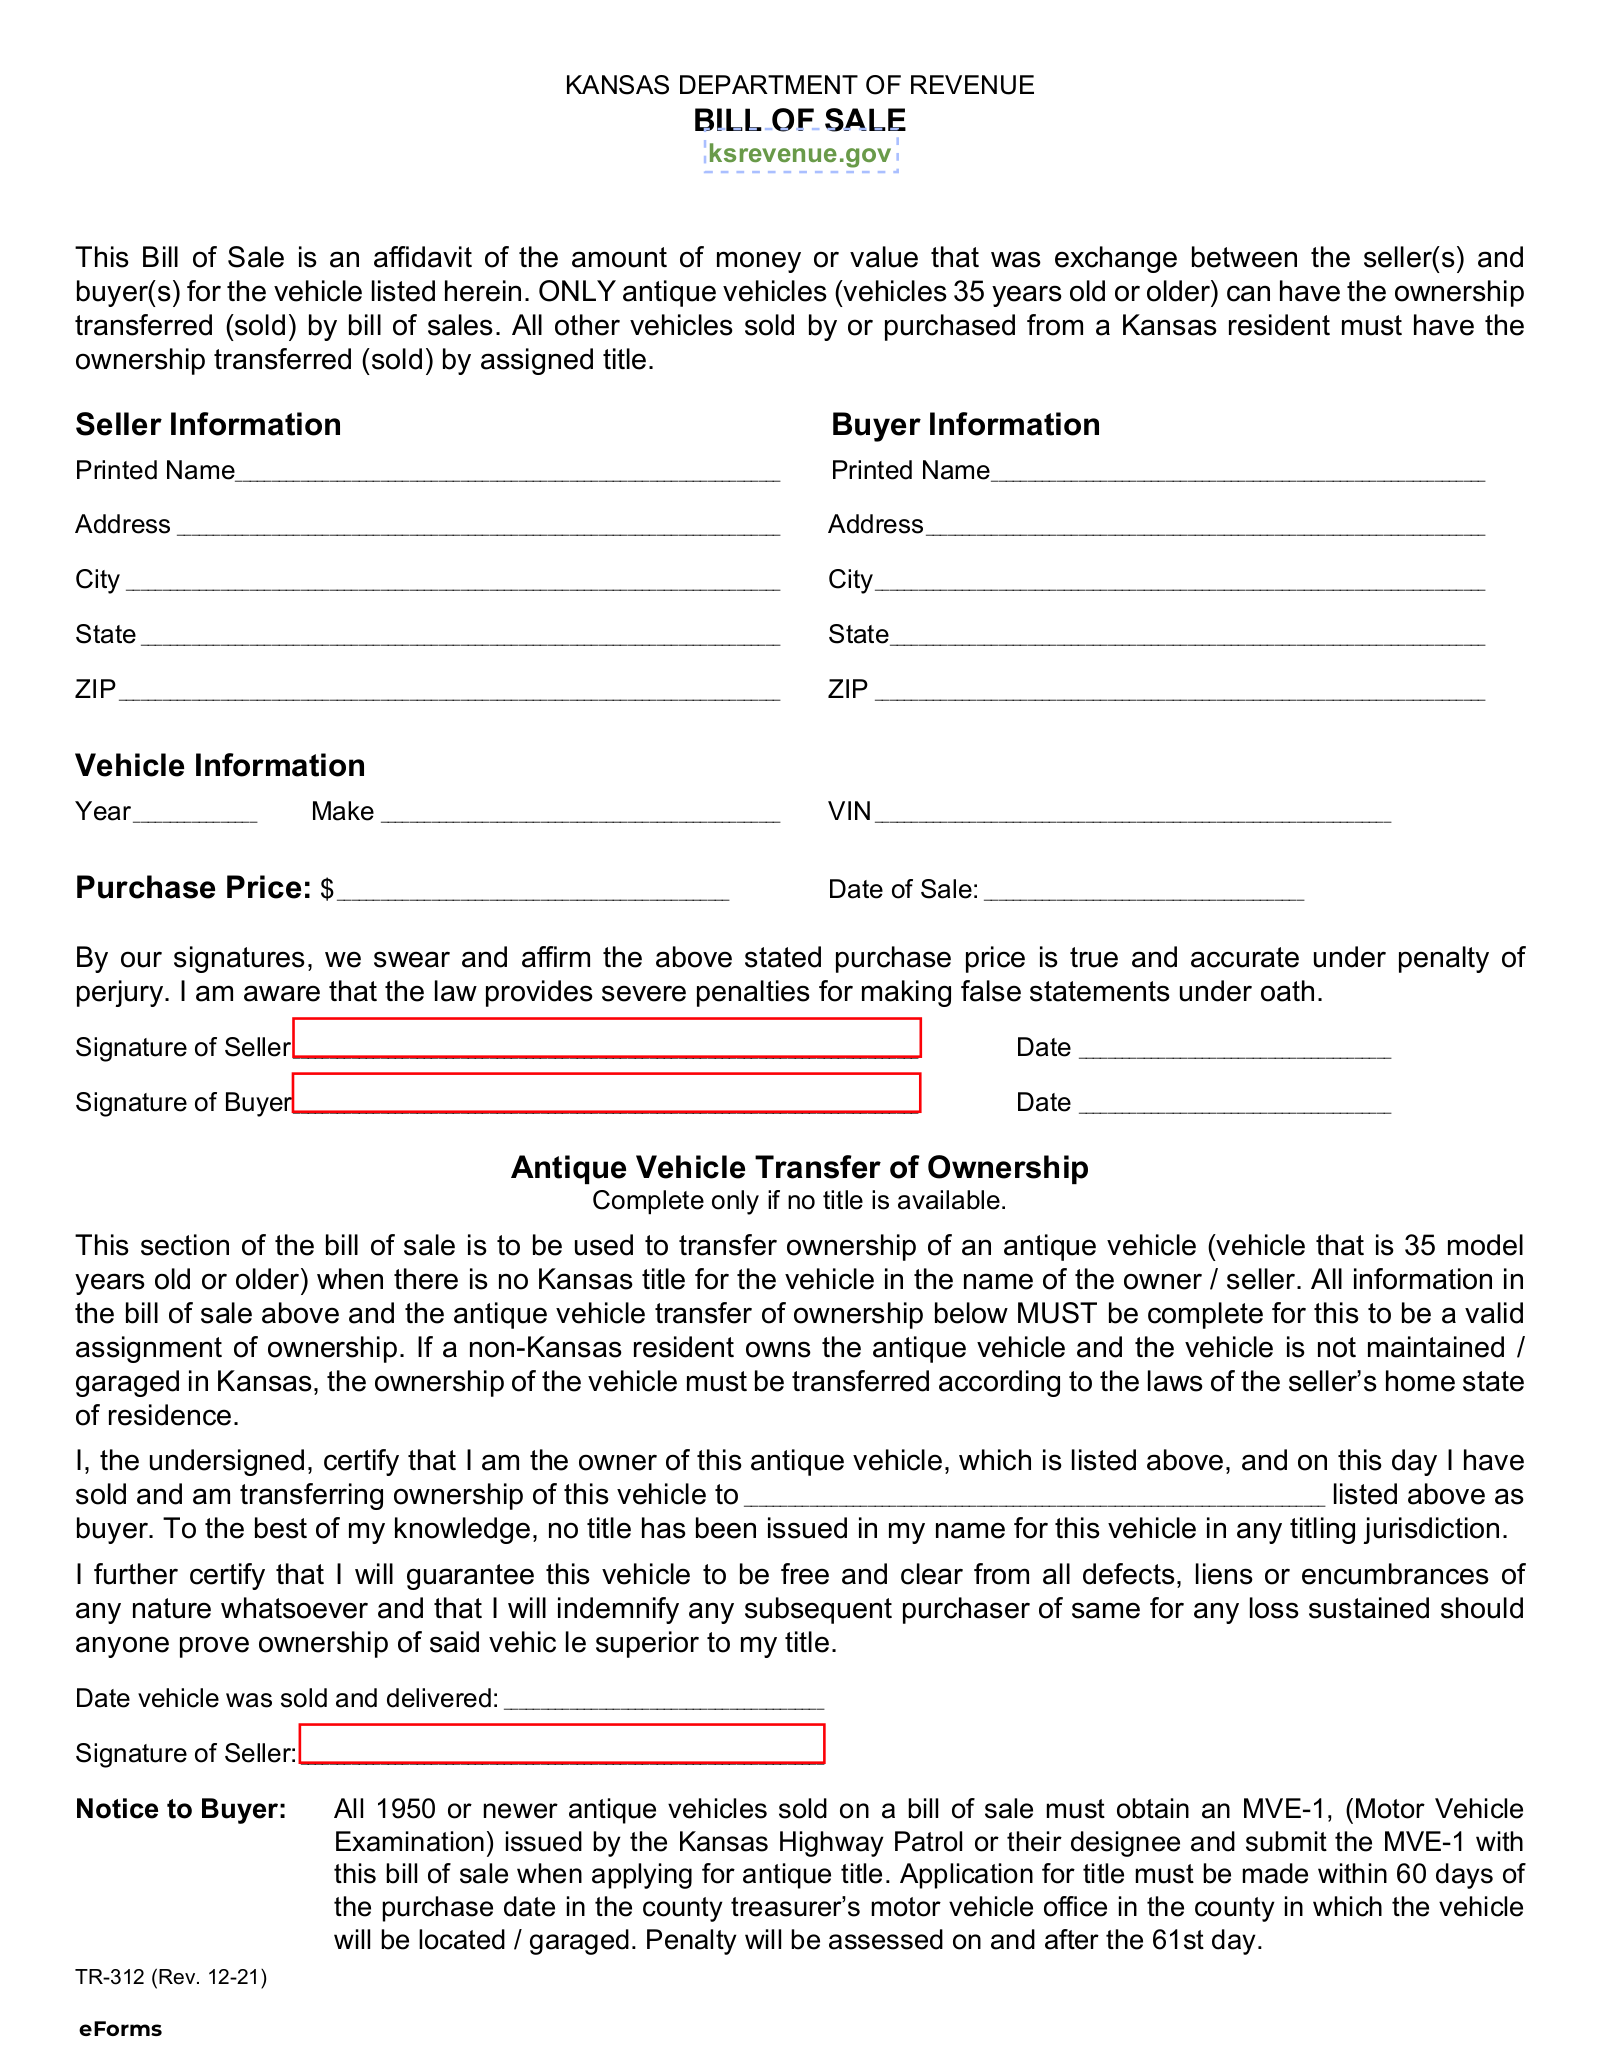 free-kansas-bill-of-sale-forms-4-pdf-eforms